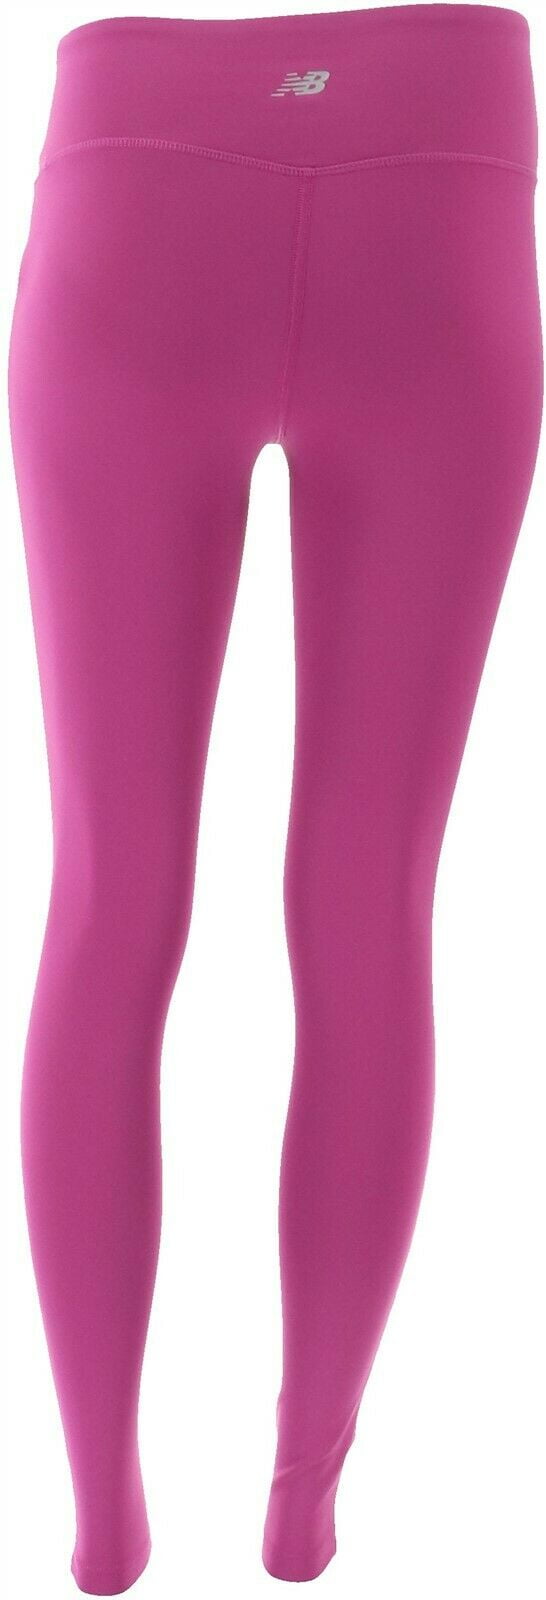 new balance pink leggings